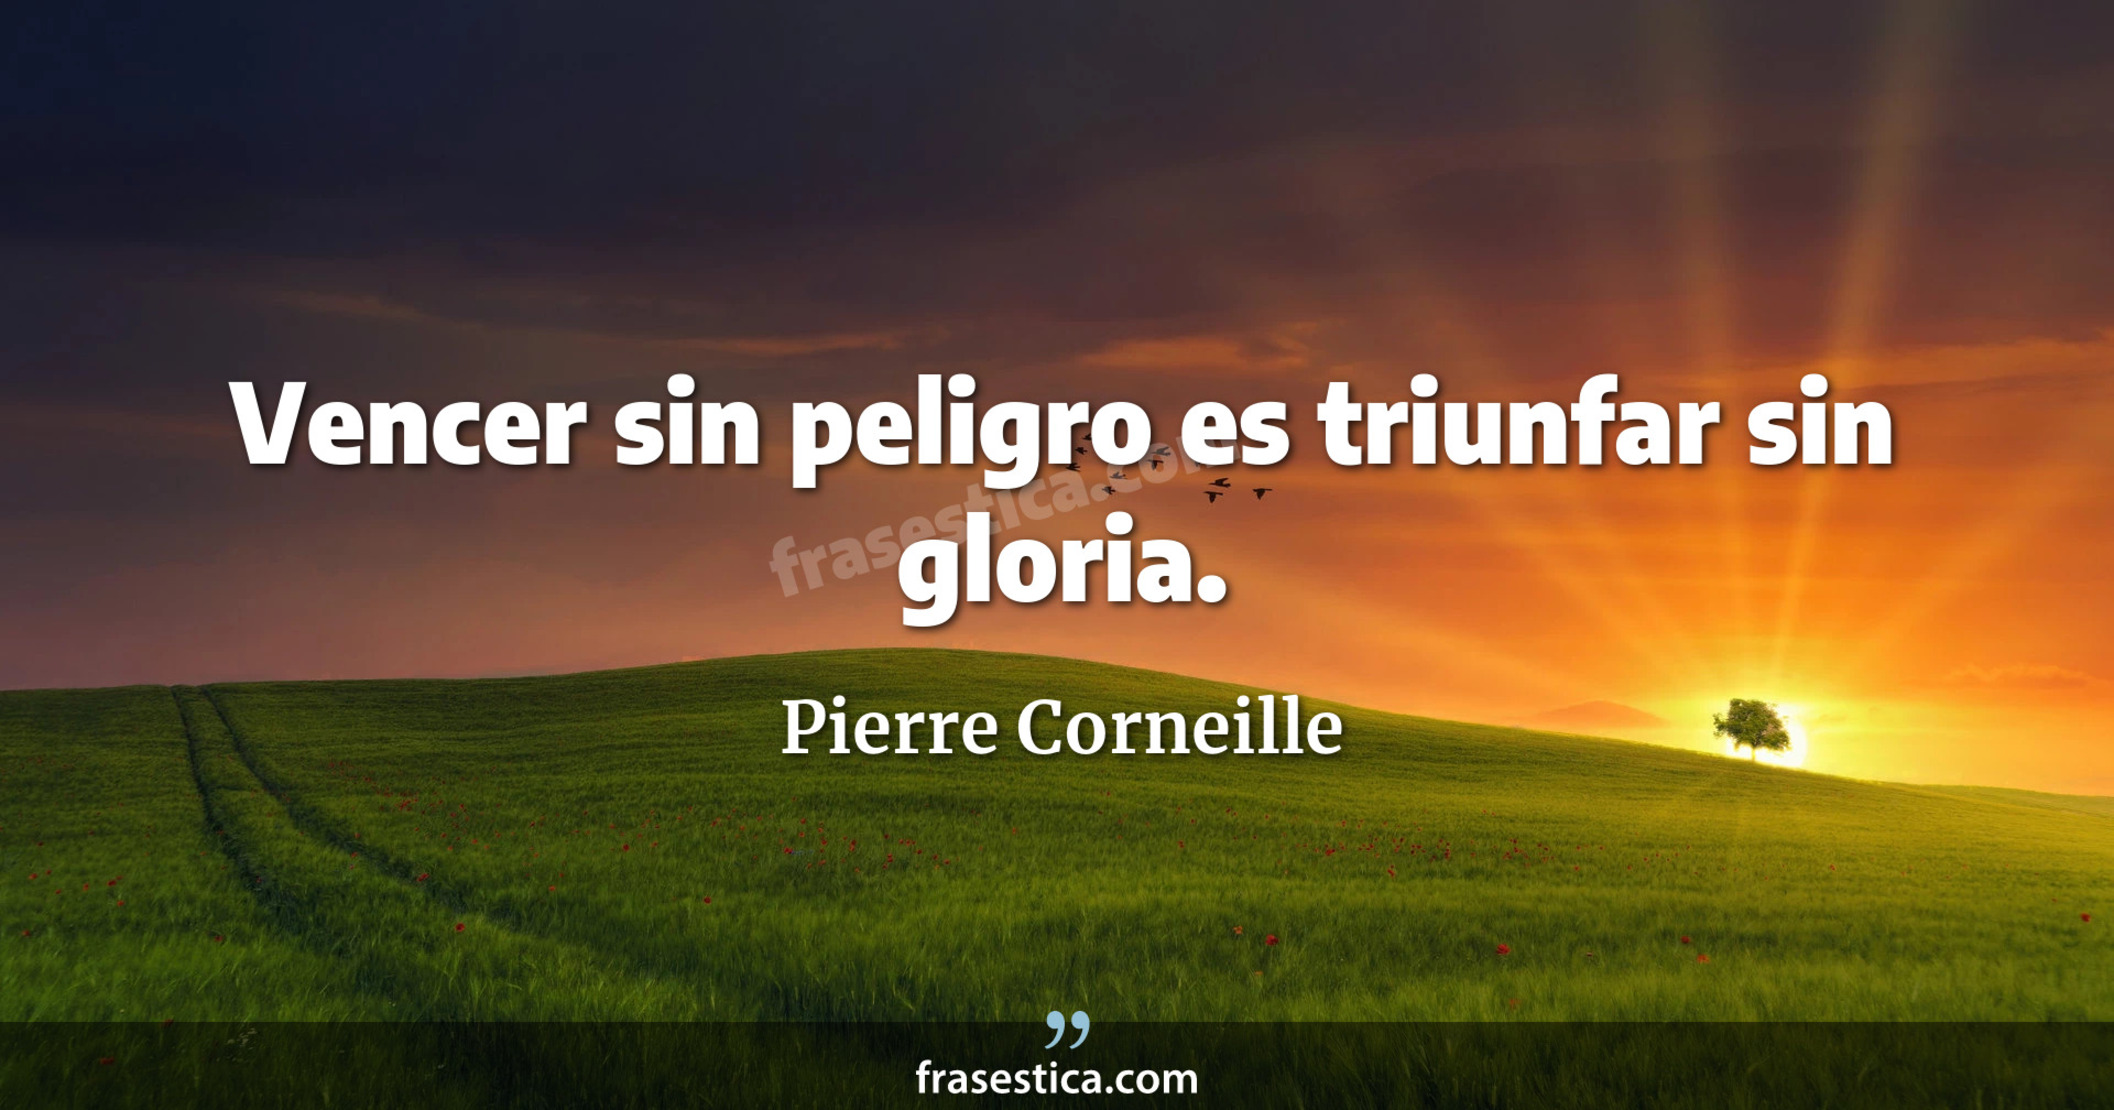 Vencer sin peligro es triunfar sin gloria. - Pierre Corneille